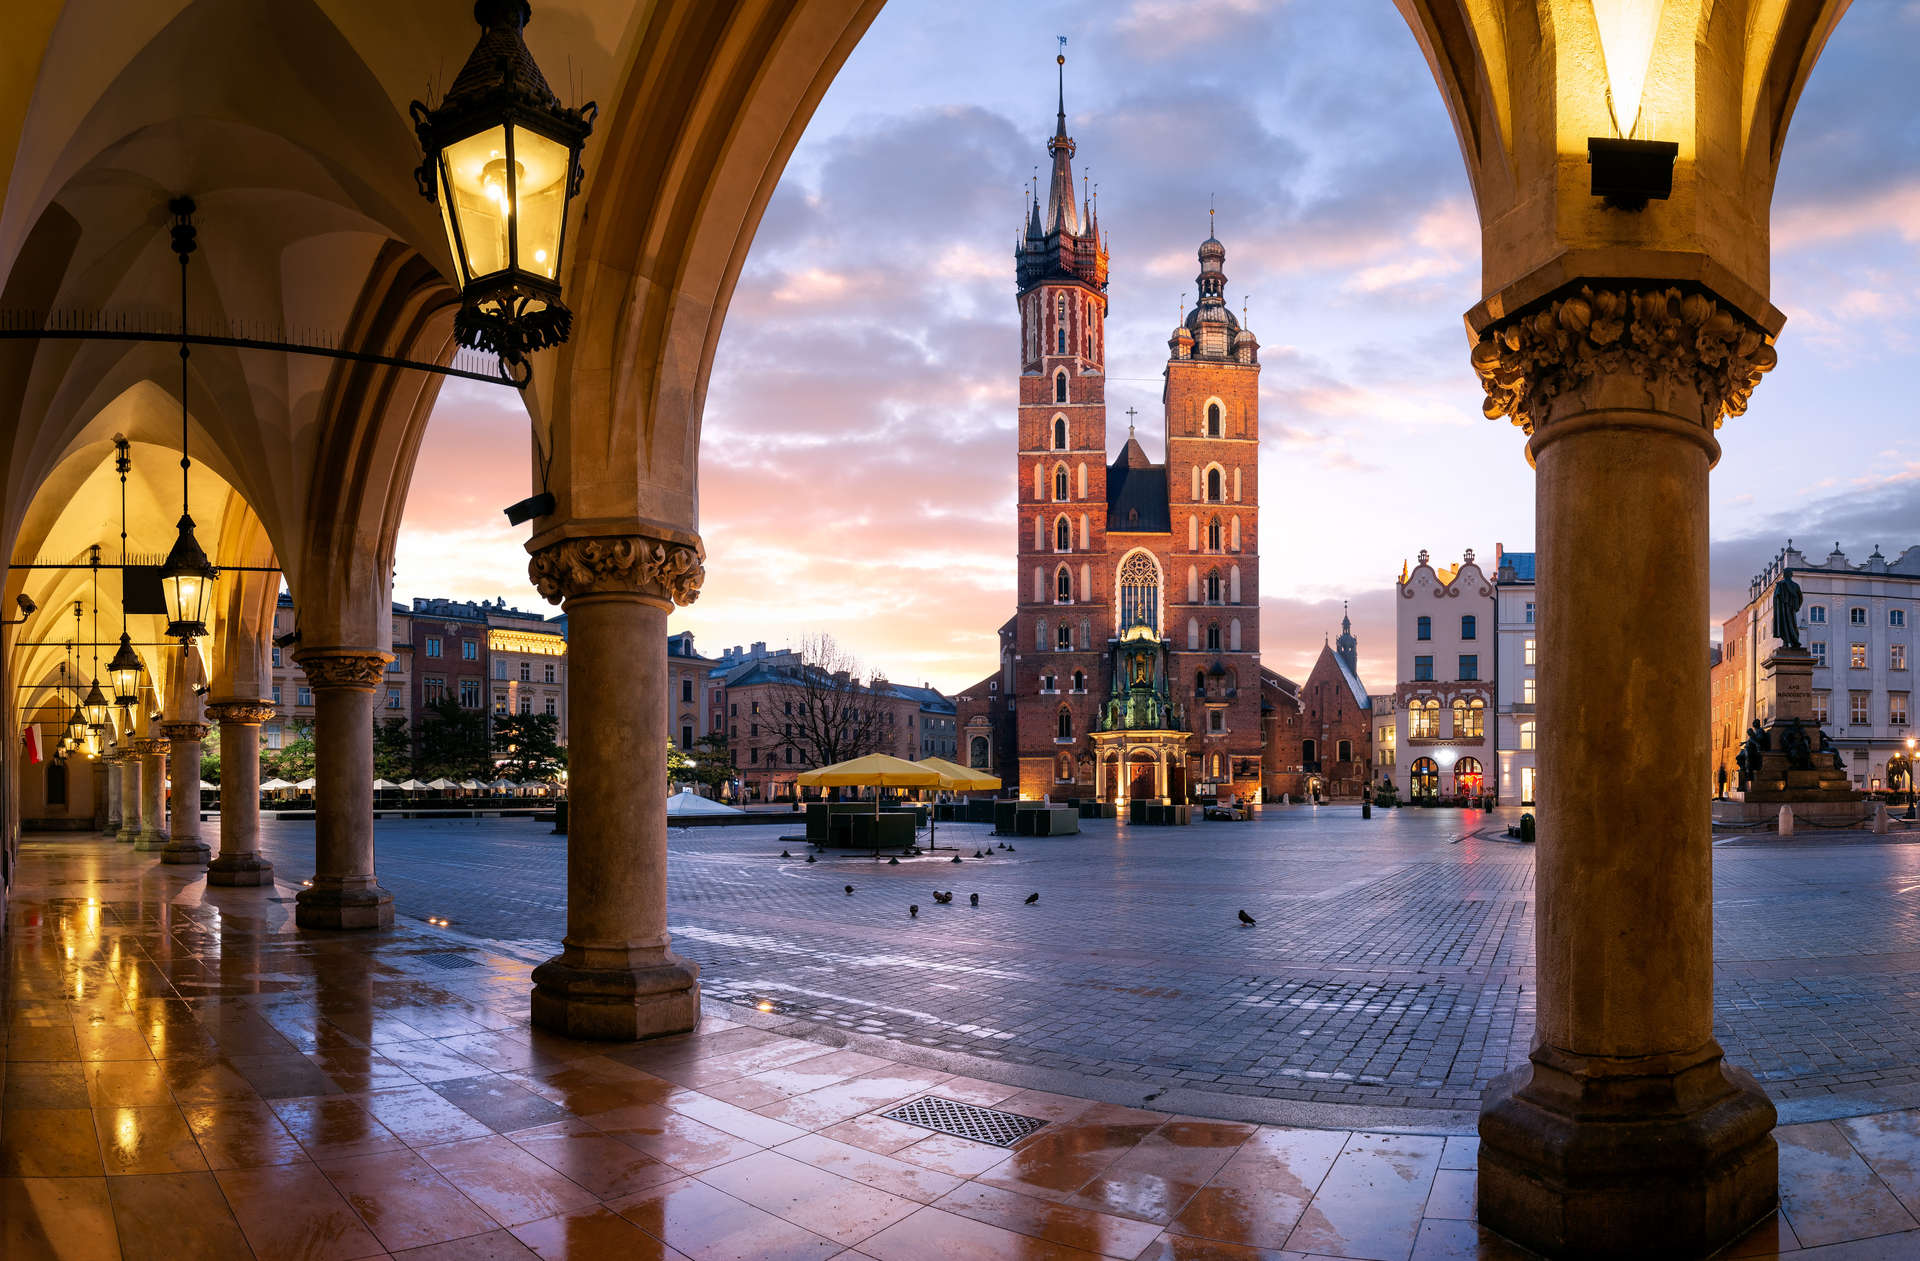 Kraków's main square